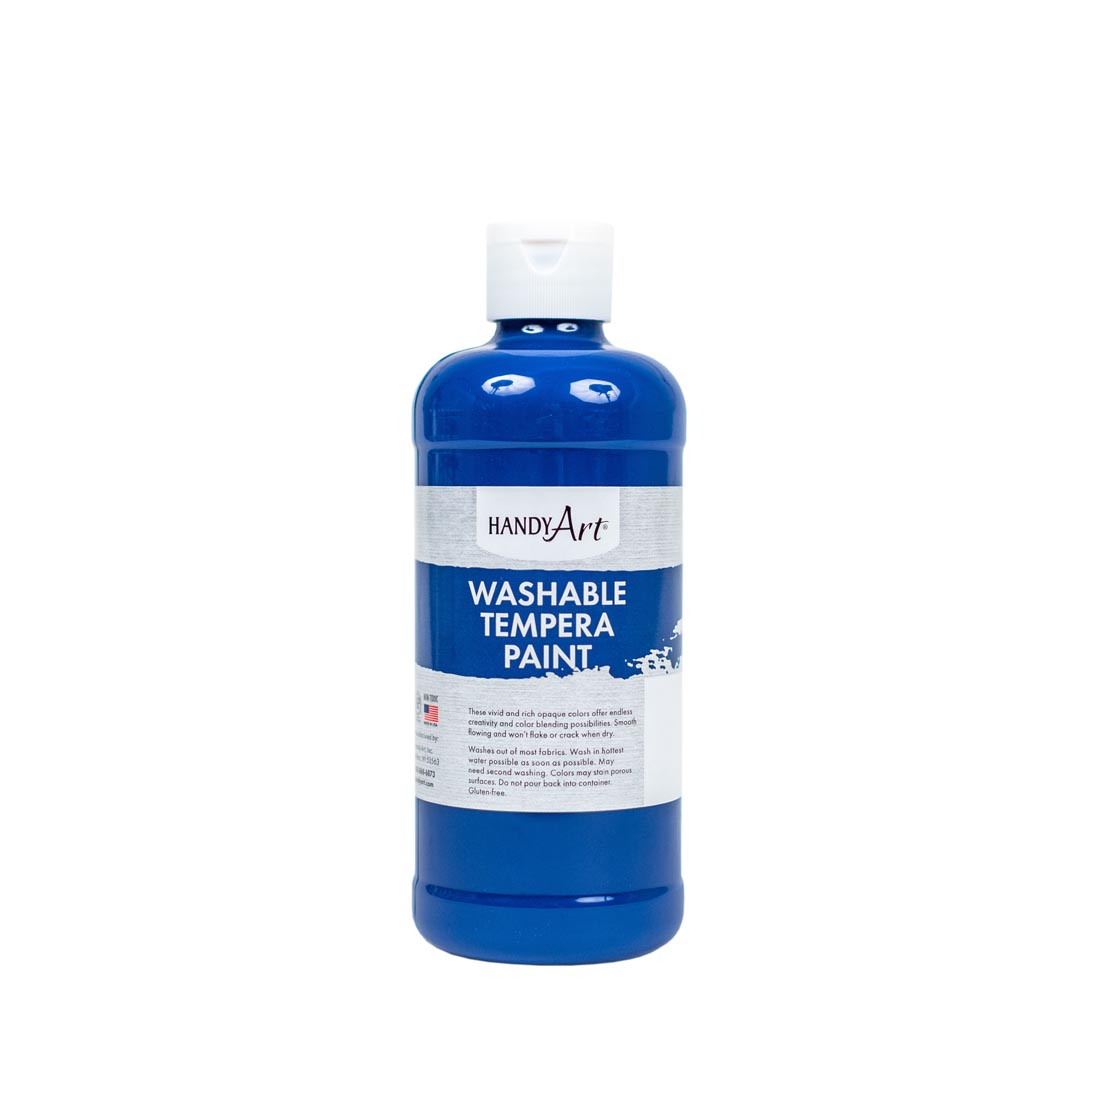 Pint bottle of Blue Handy Art Washable Tempera Paint